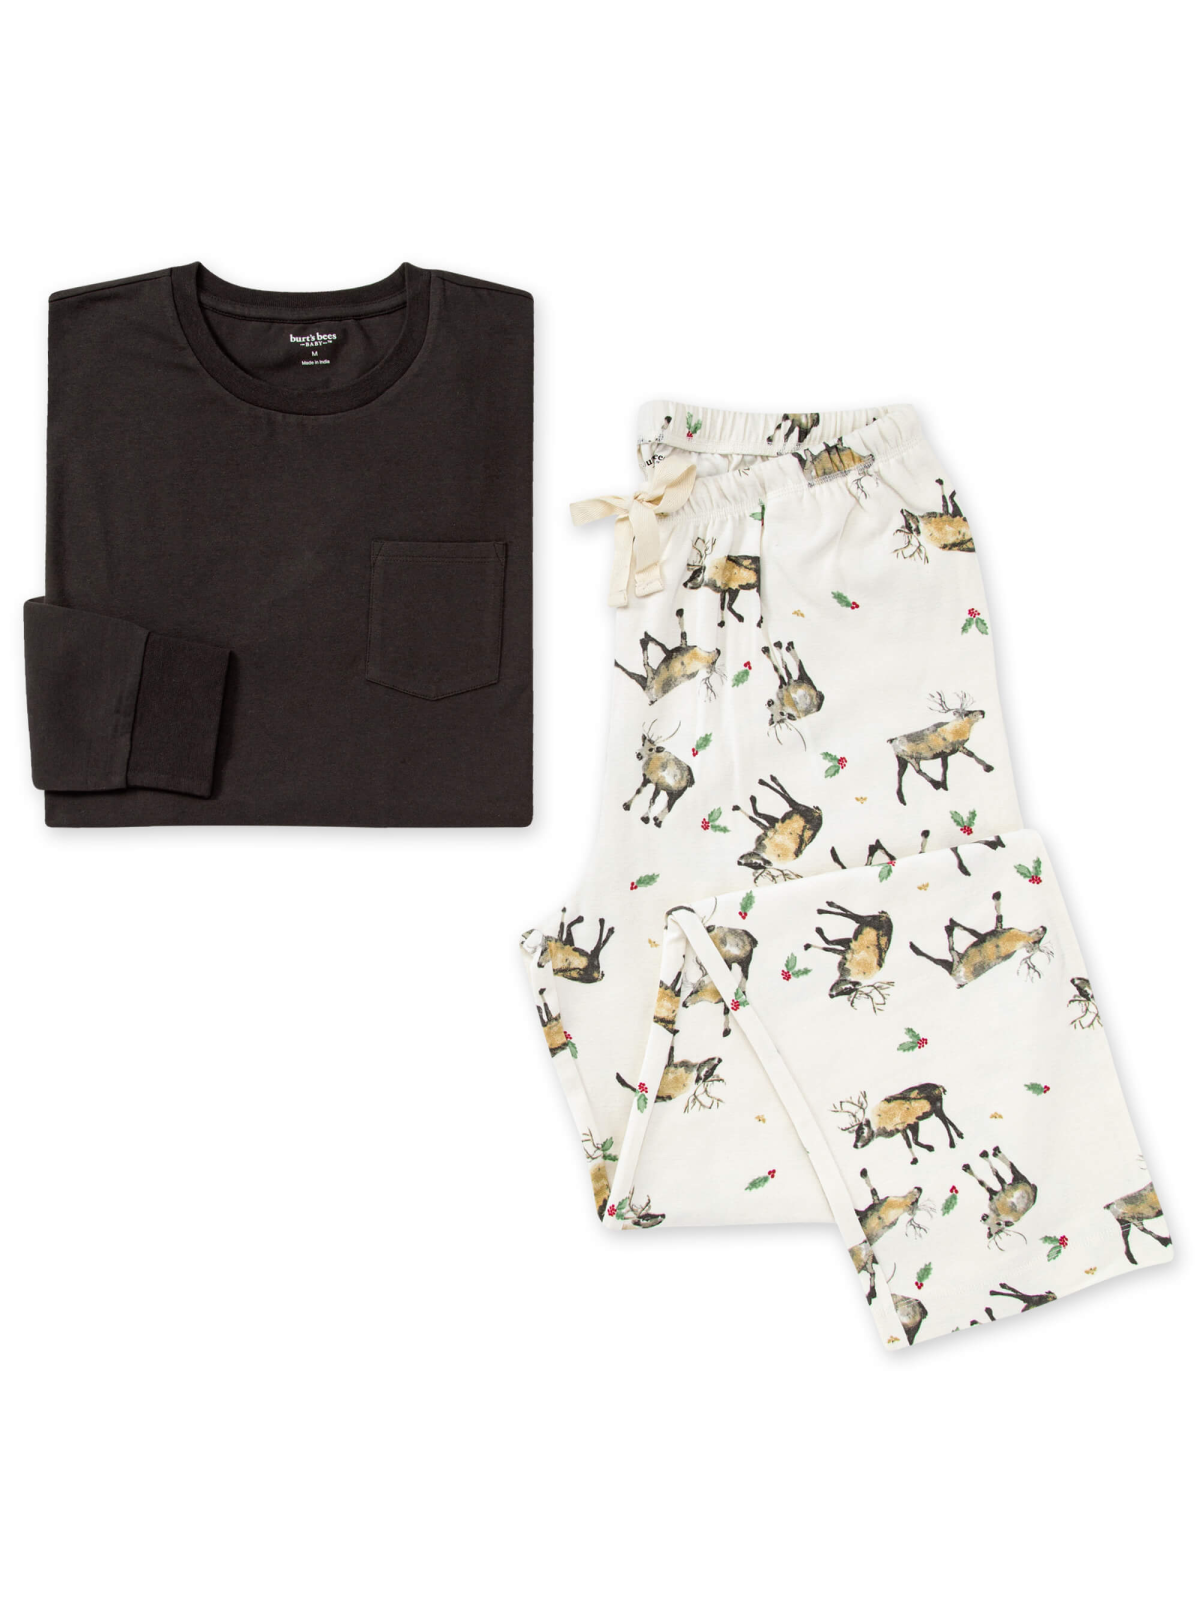 Adult Men's Pocket Tee Pajama Set, Northern Reindeer